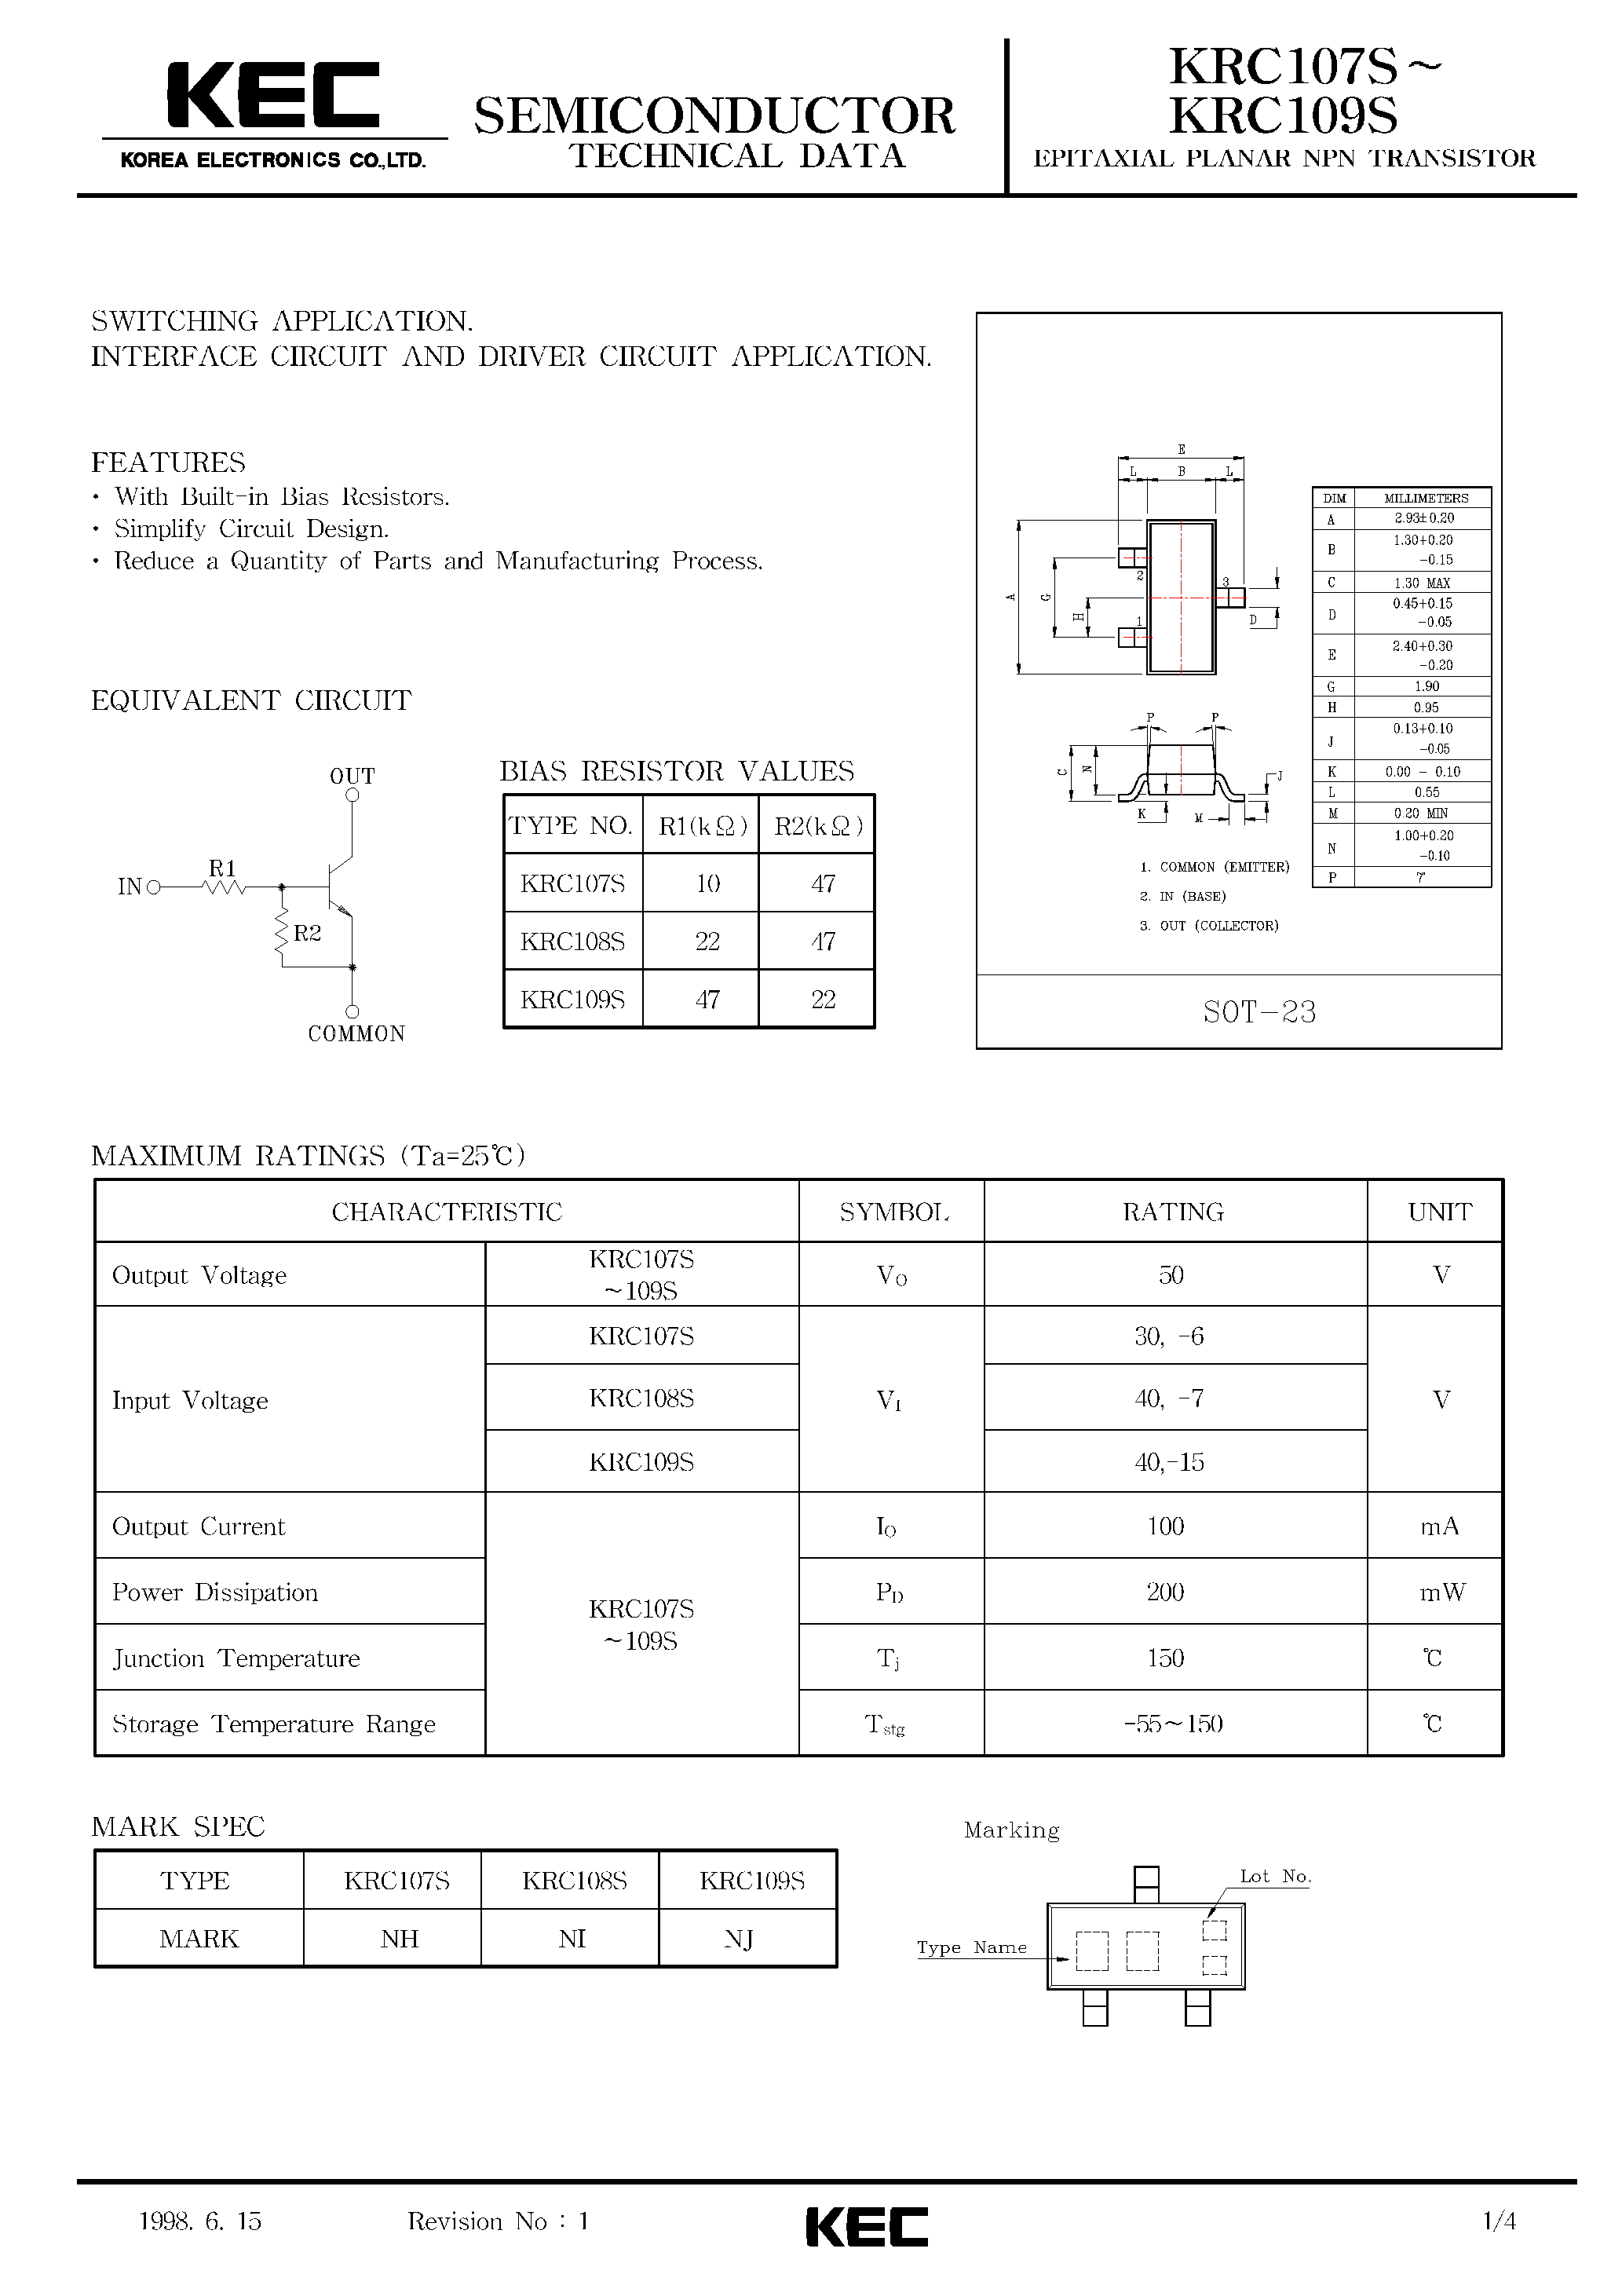 Datasheet KRC107S - (KRC107S - KRC109S) EPITAXIAL PLANAR PNP TRANSISTOR page 1